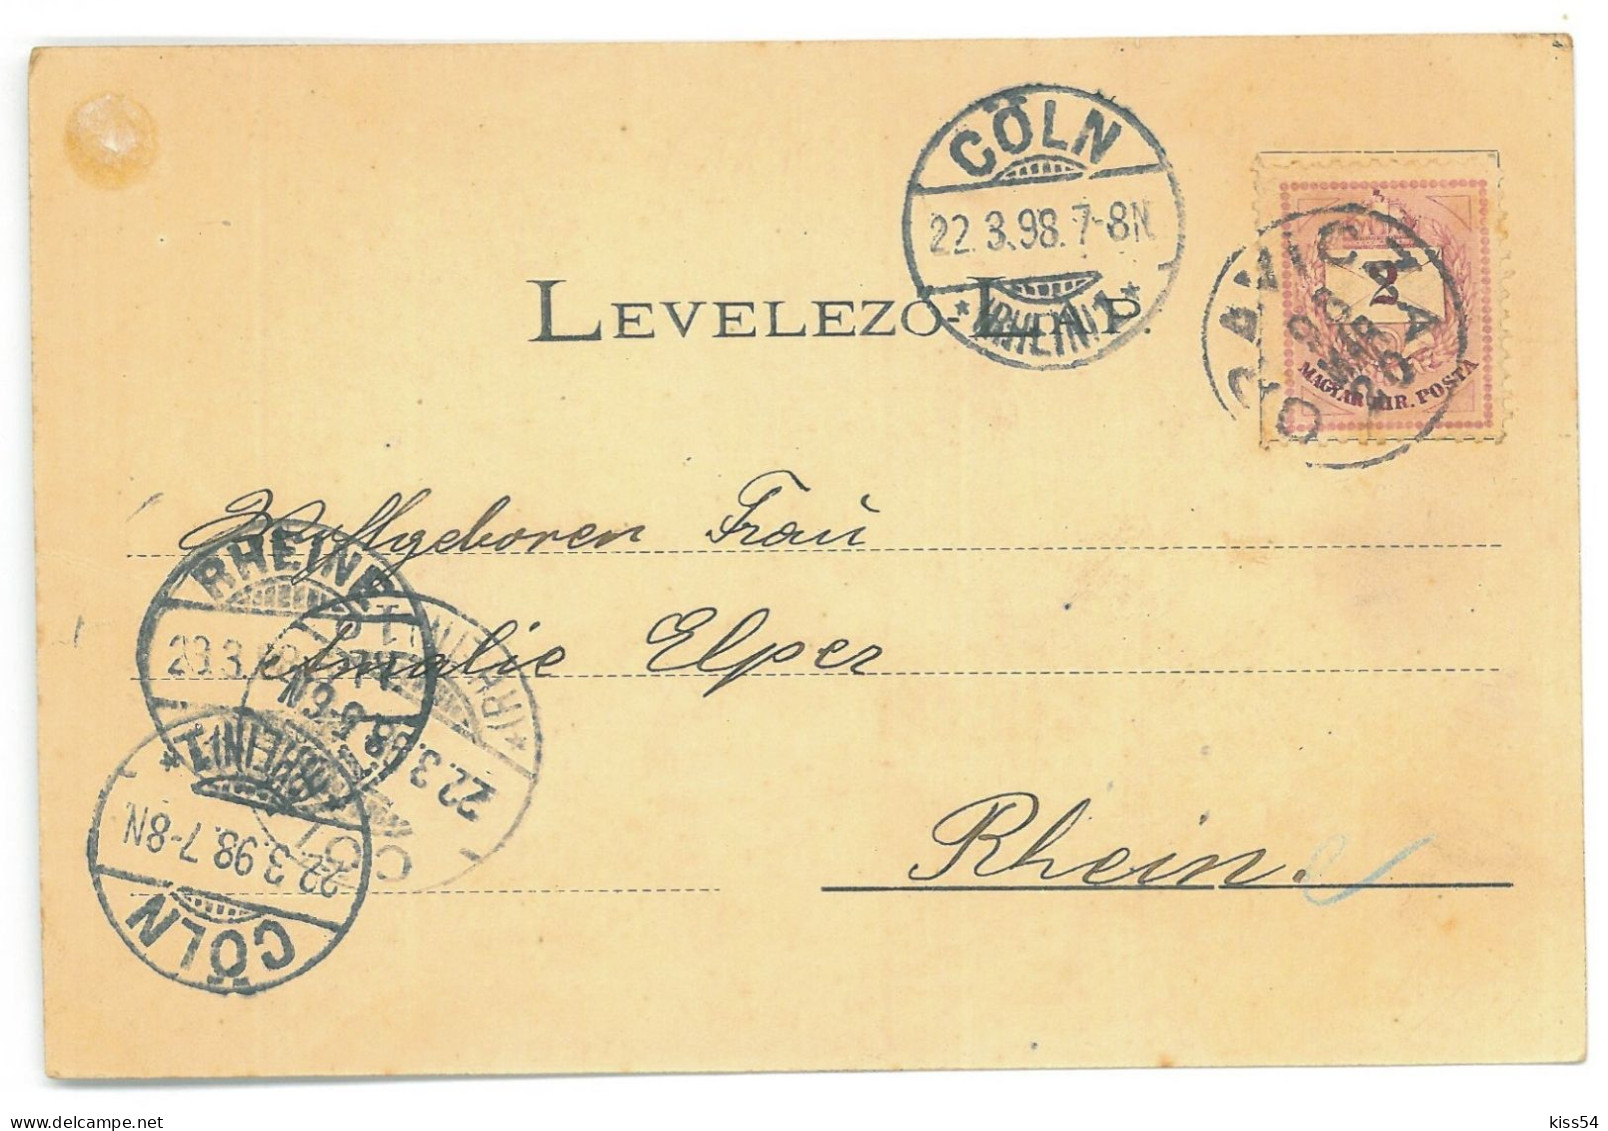 RO 91 - 25398 ORAVITA, Caras Severin, Litho, Romania - Old Postcard - Used - 1898 - Roumanie